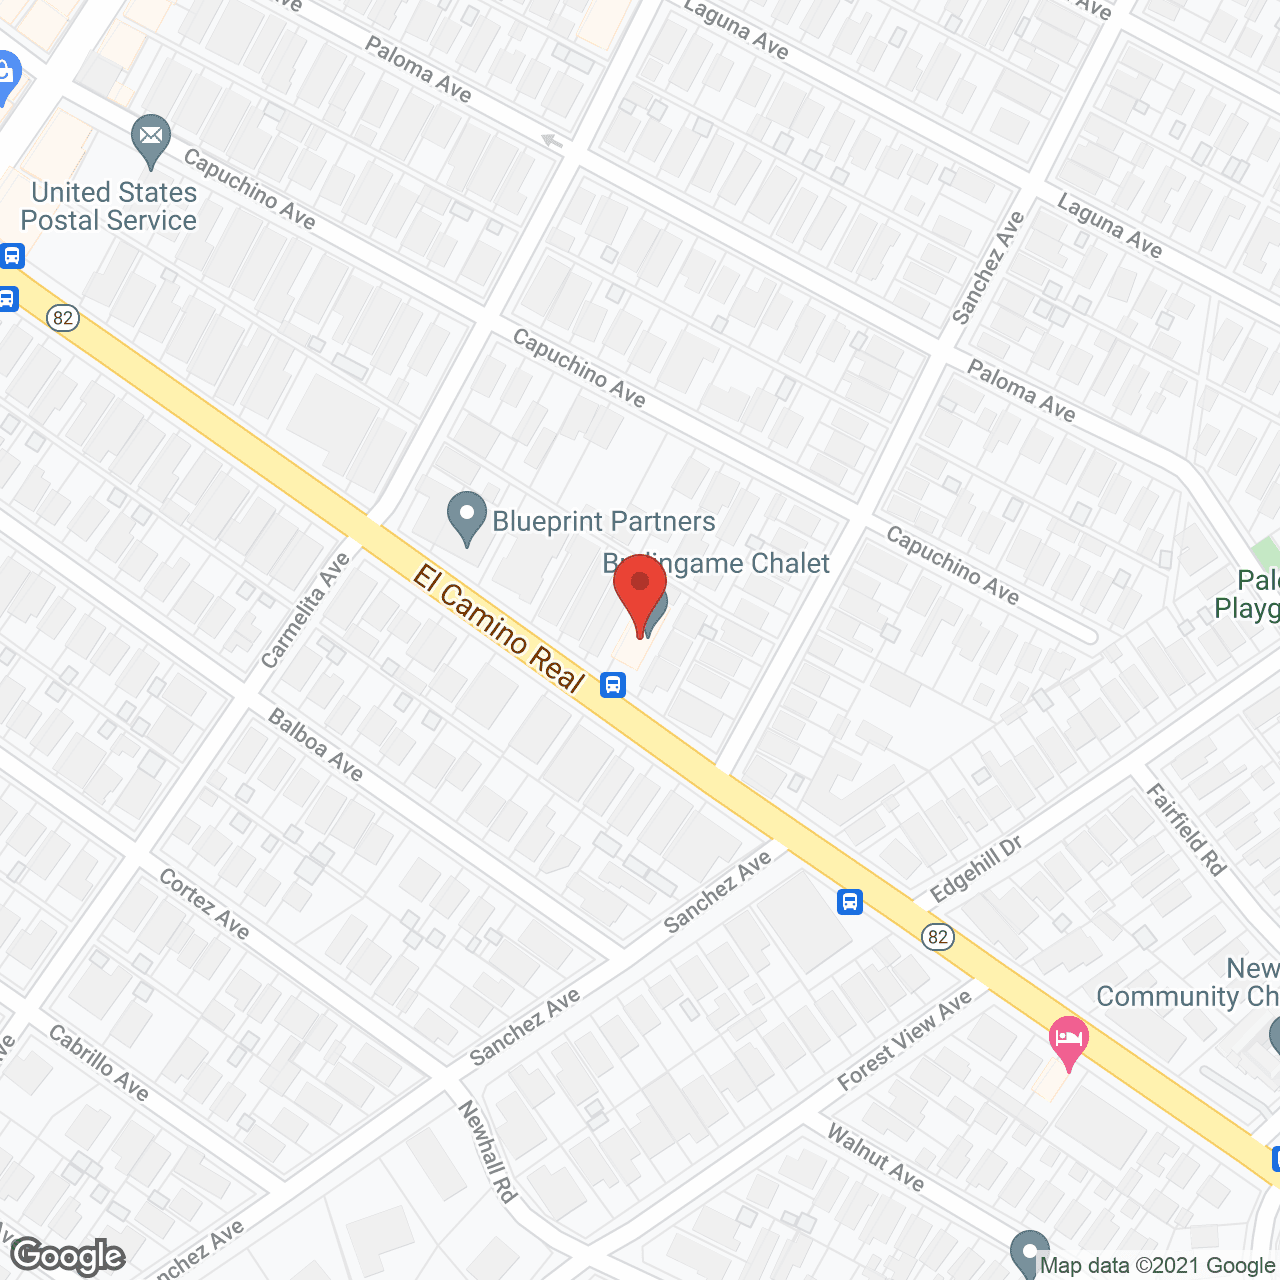 Burlingame Hacienda in google map